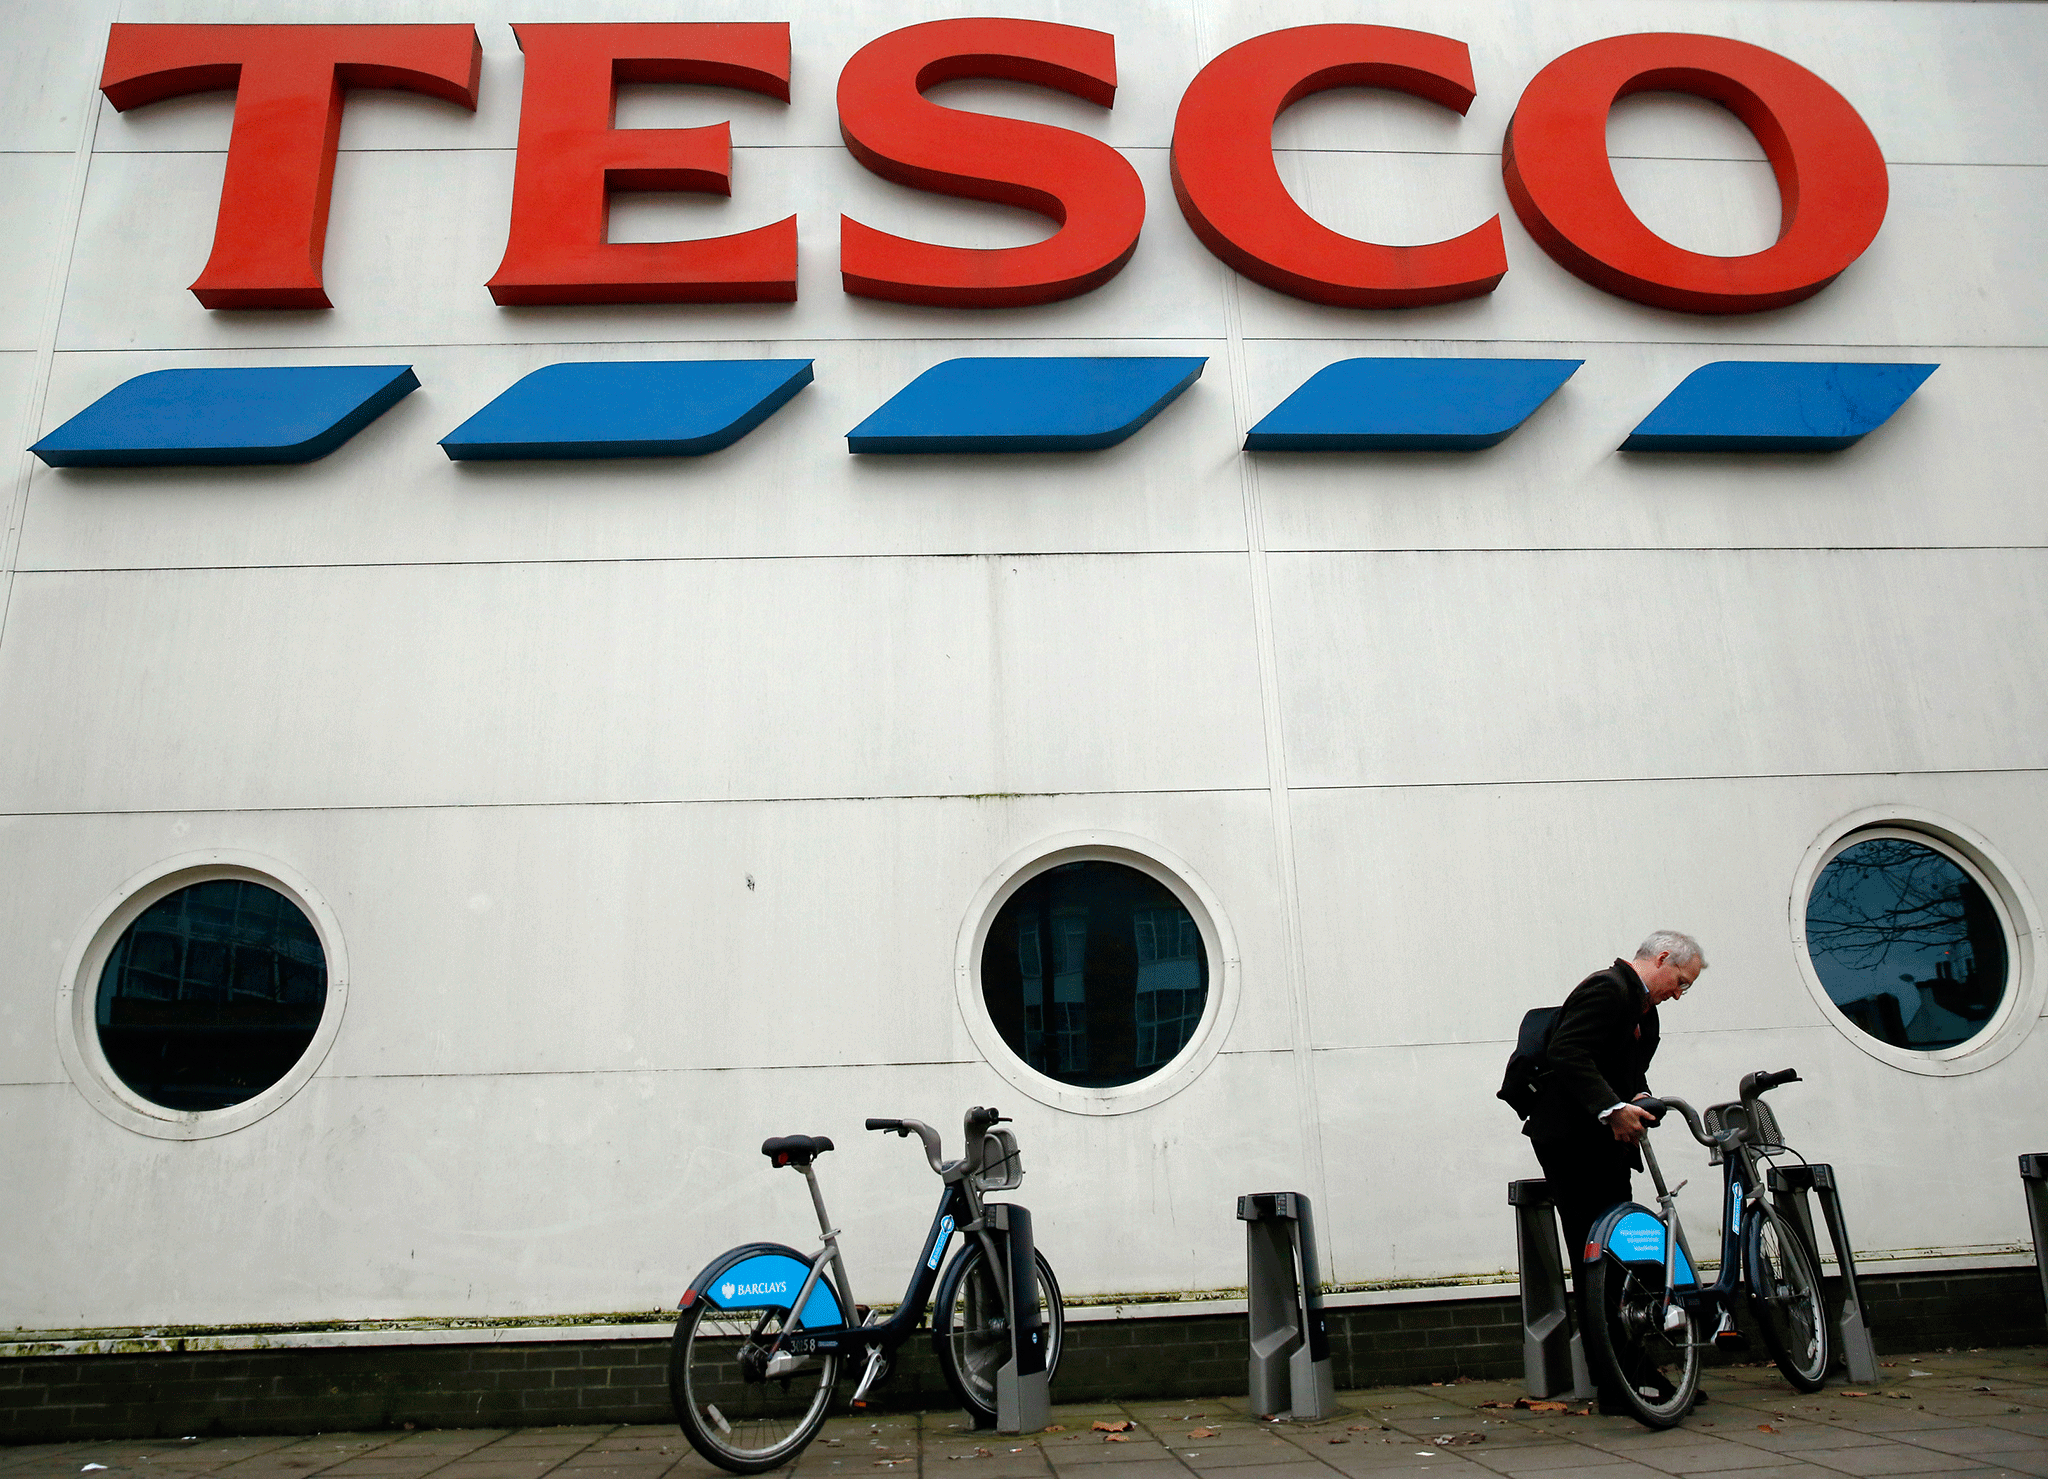 Tesco boss David Lewis shakes on deal to buy food wholesaler Booker